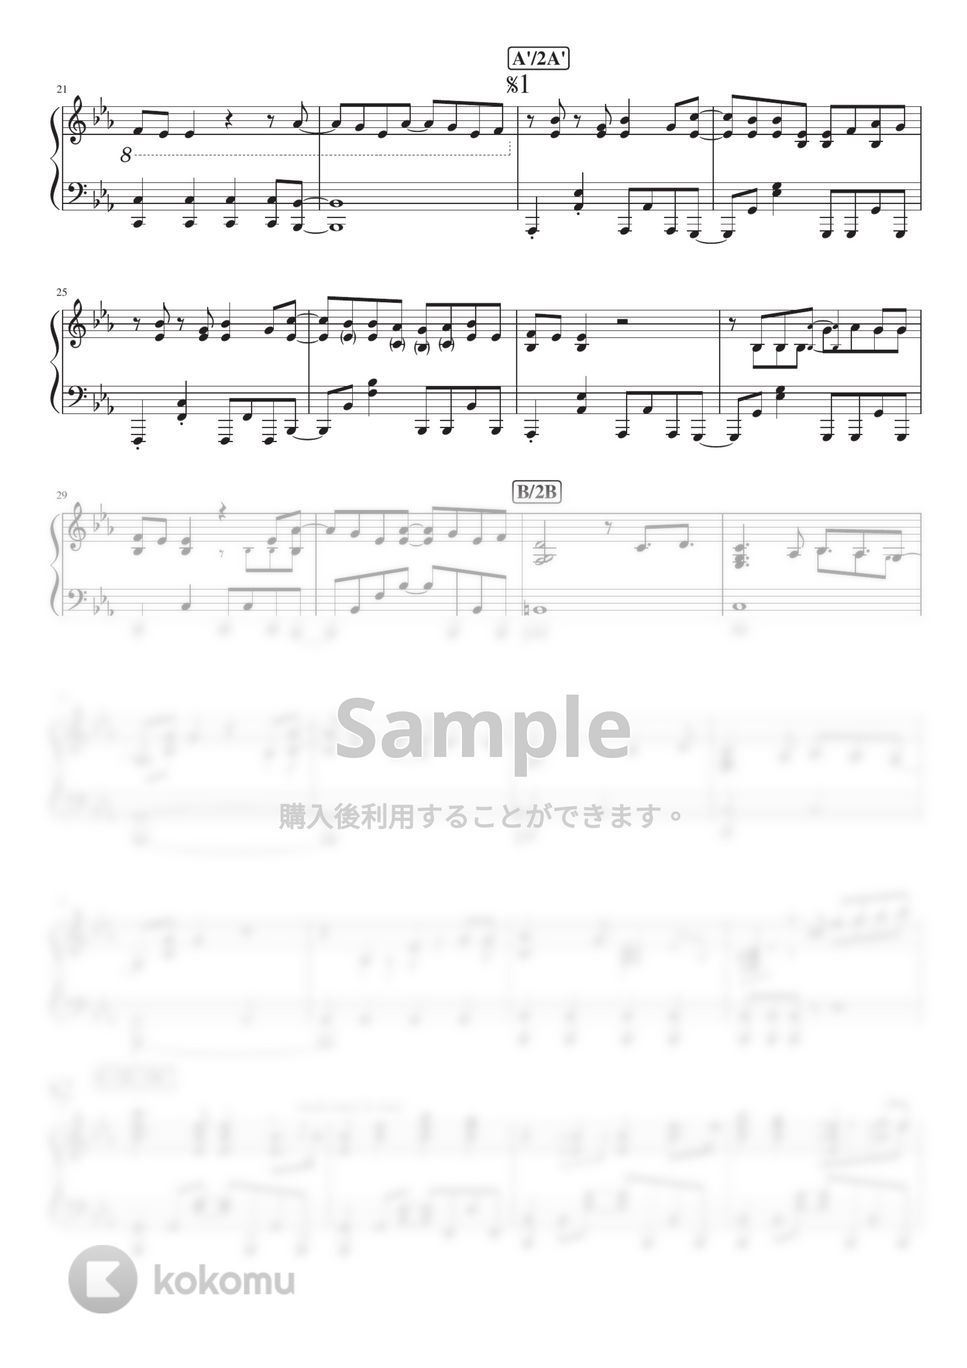 Eve - 群青讃歌 (Piano Solo) by 深根 / Fukane